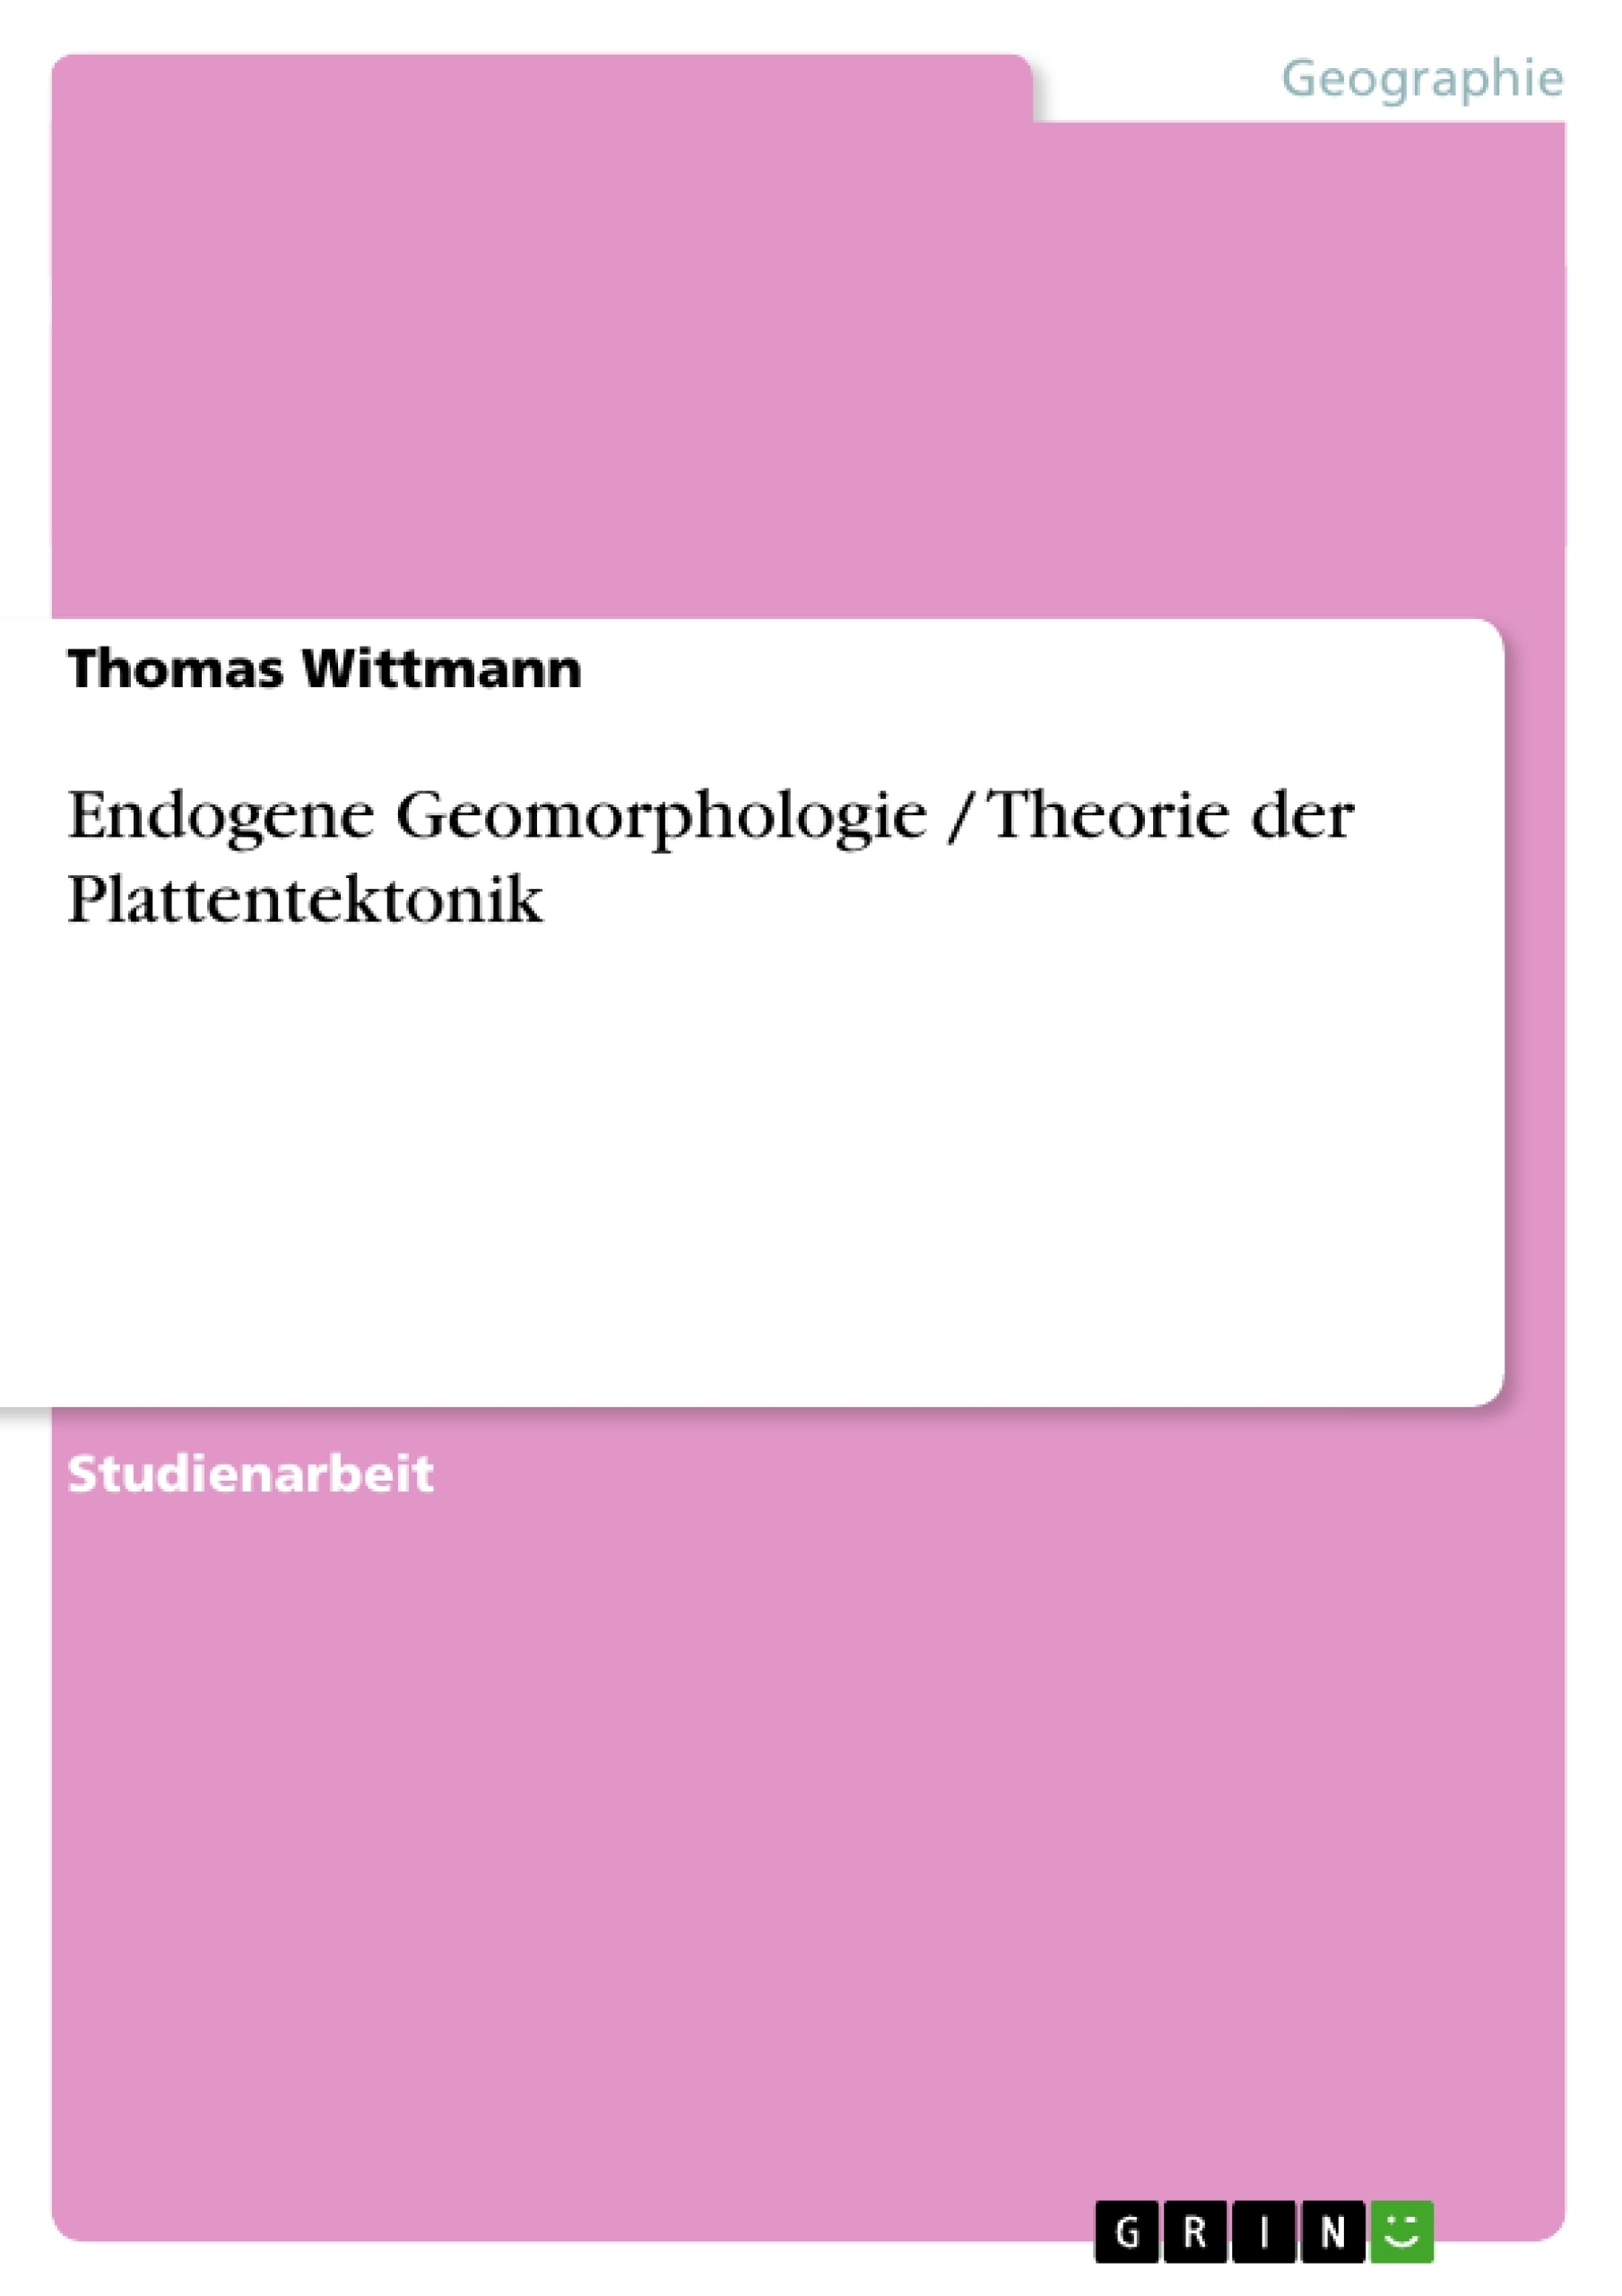 Title: Endogene Geomorphologie / Theorie der Plattentektonik